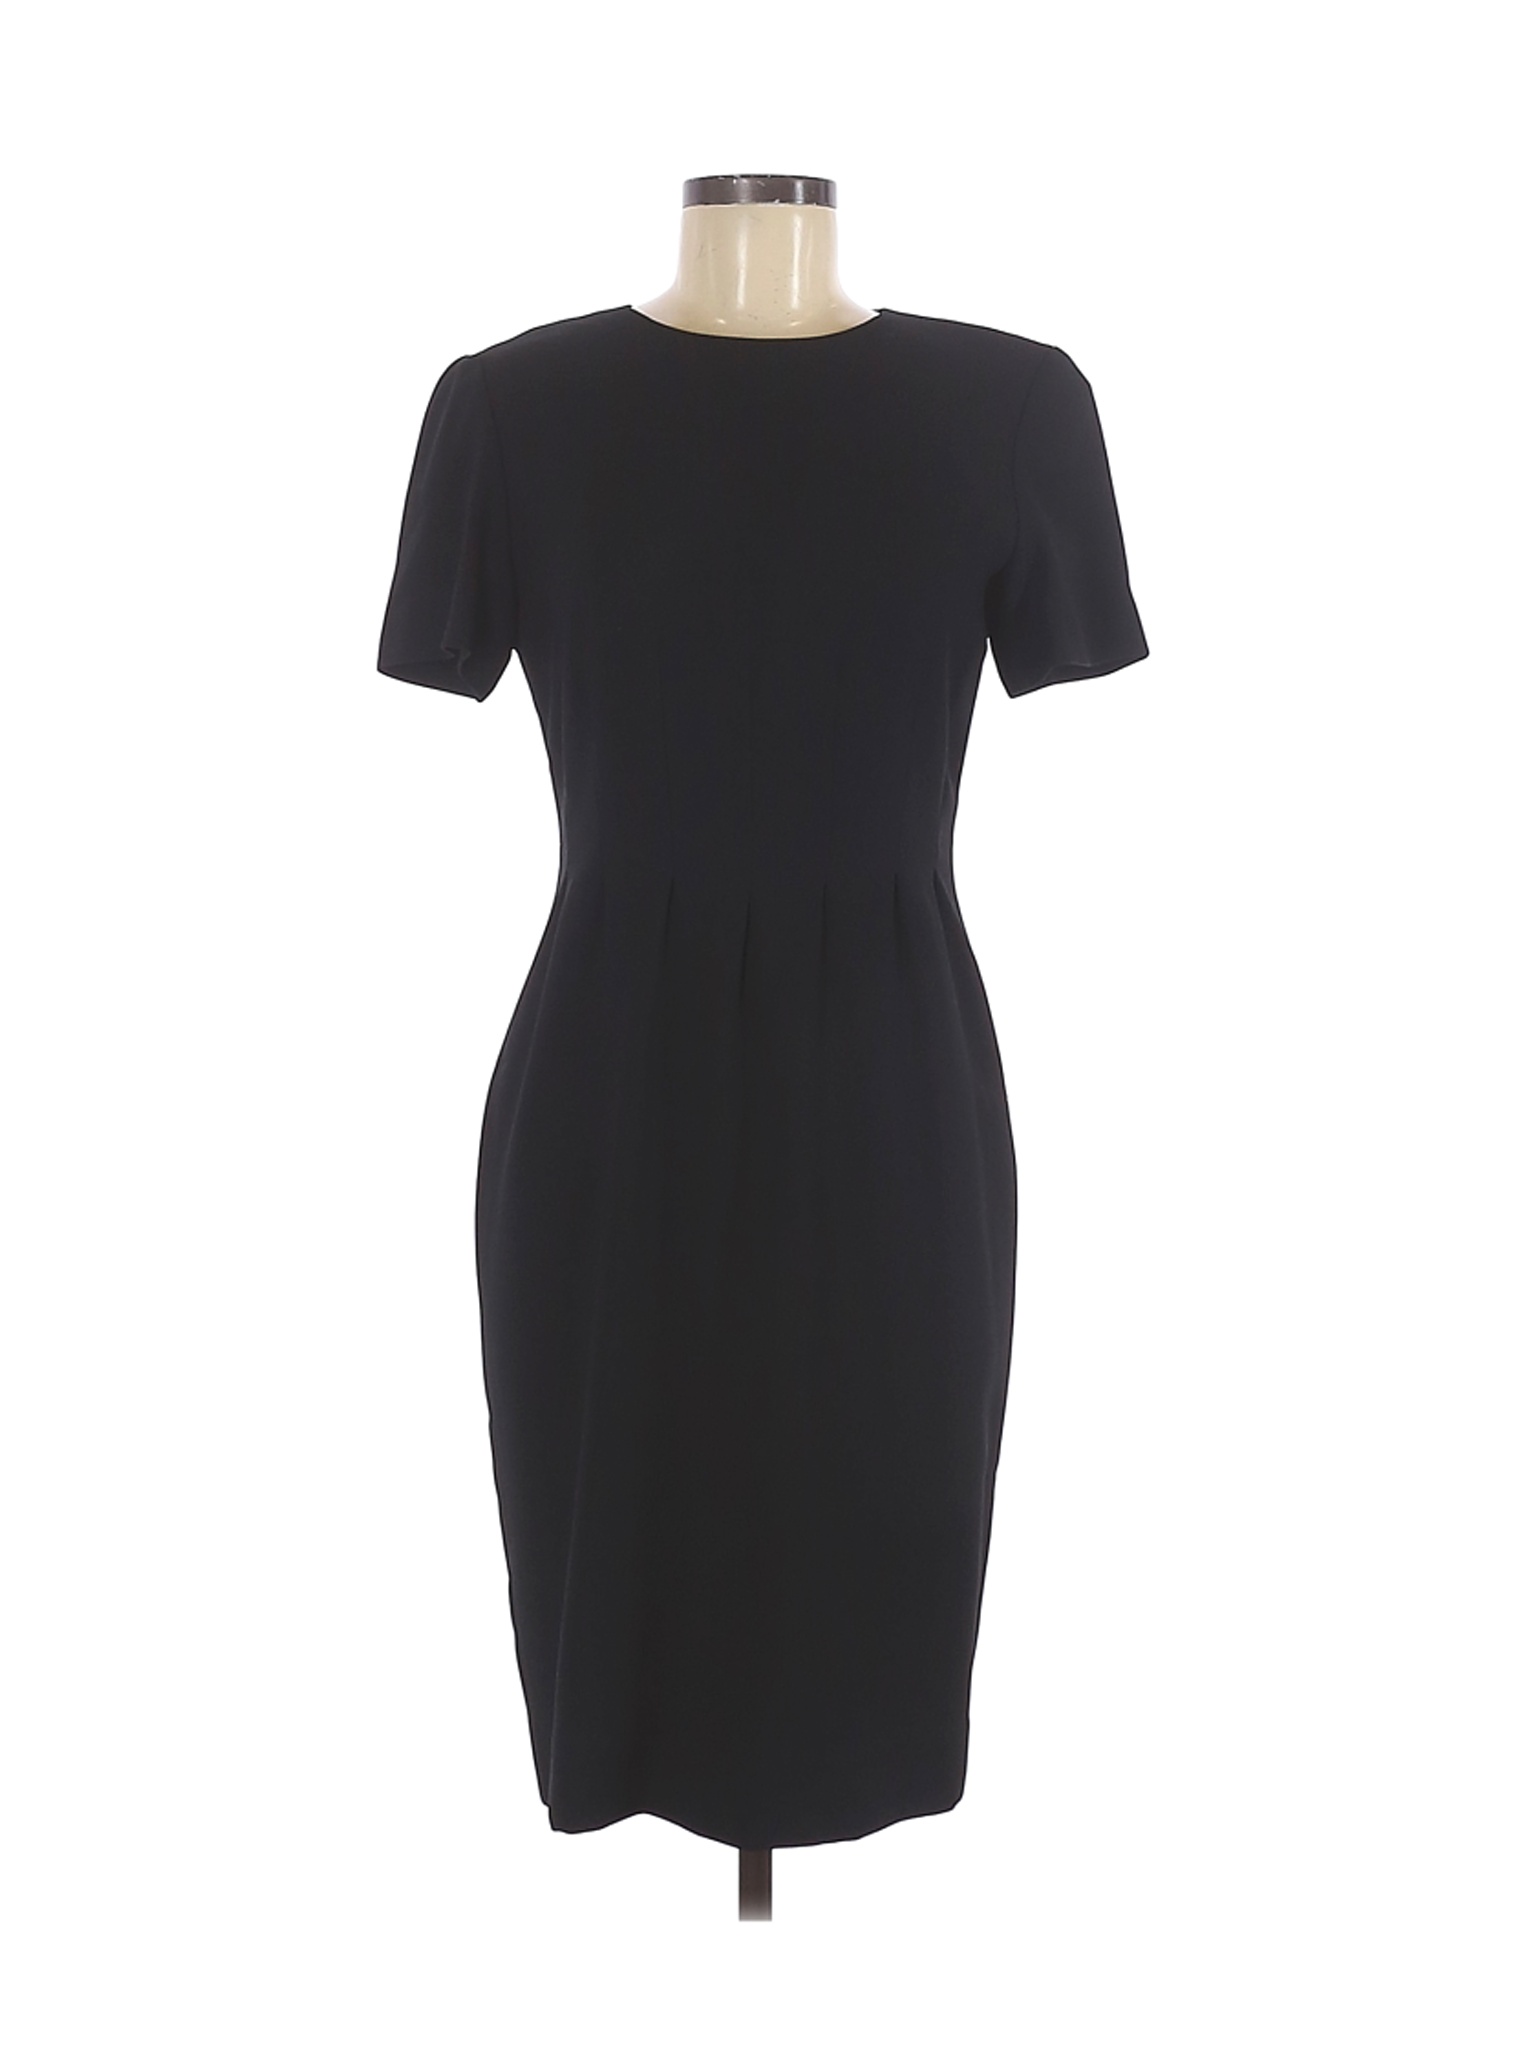 Liz Claiborne Women Black Casual Dress 6 Ebay 